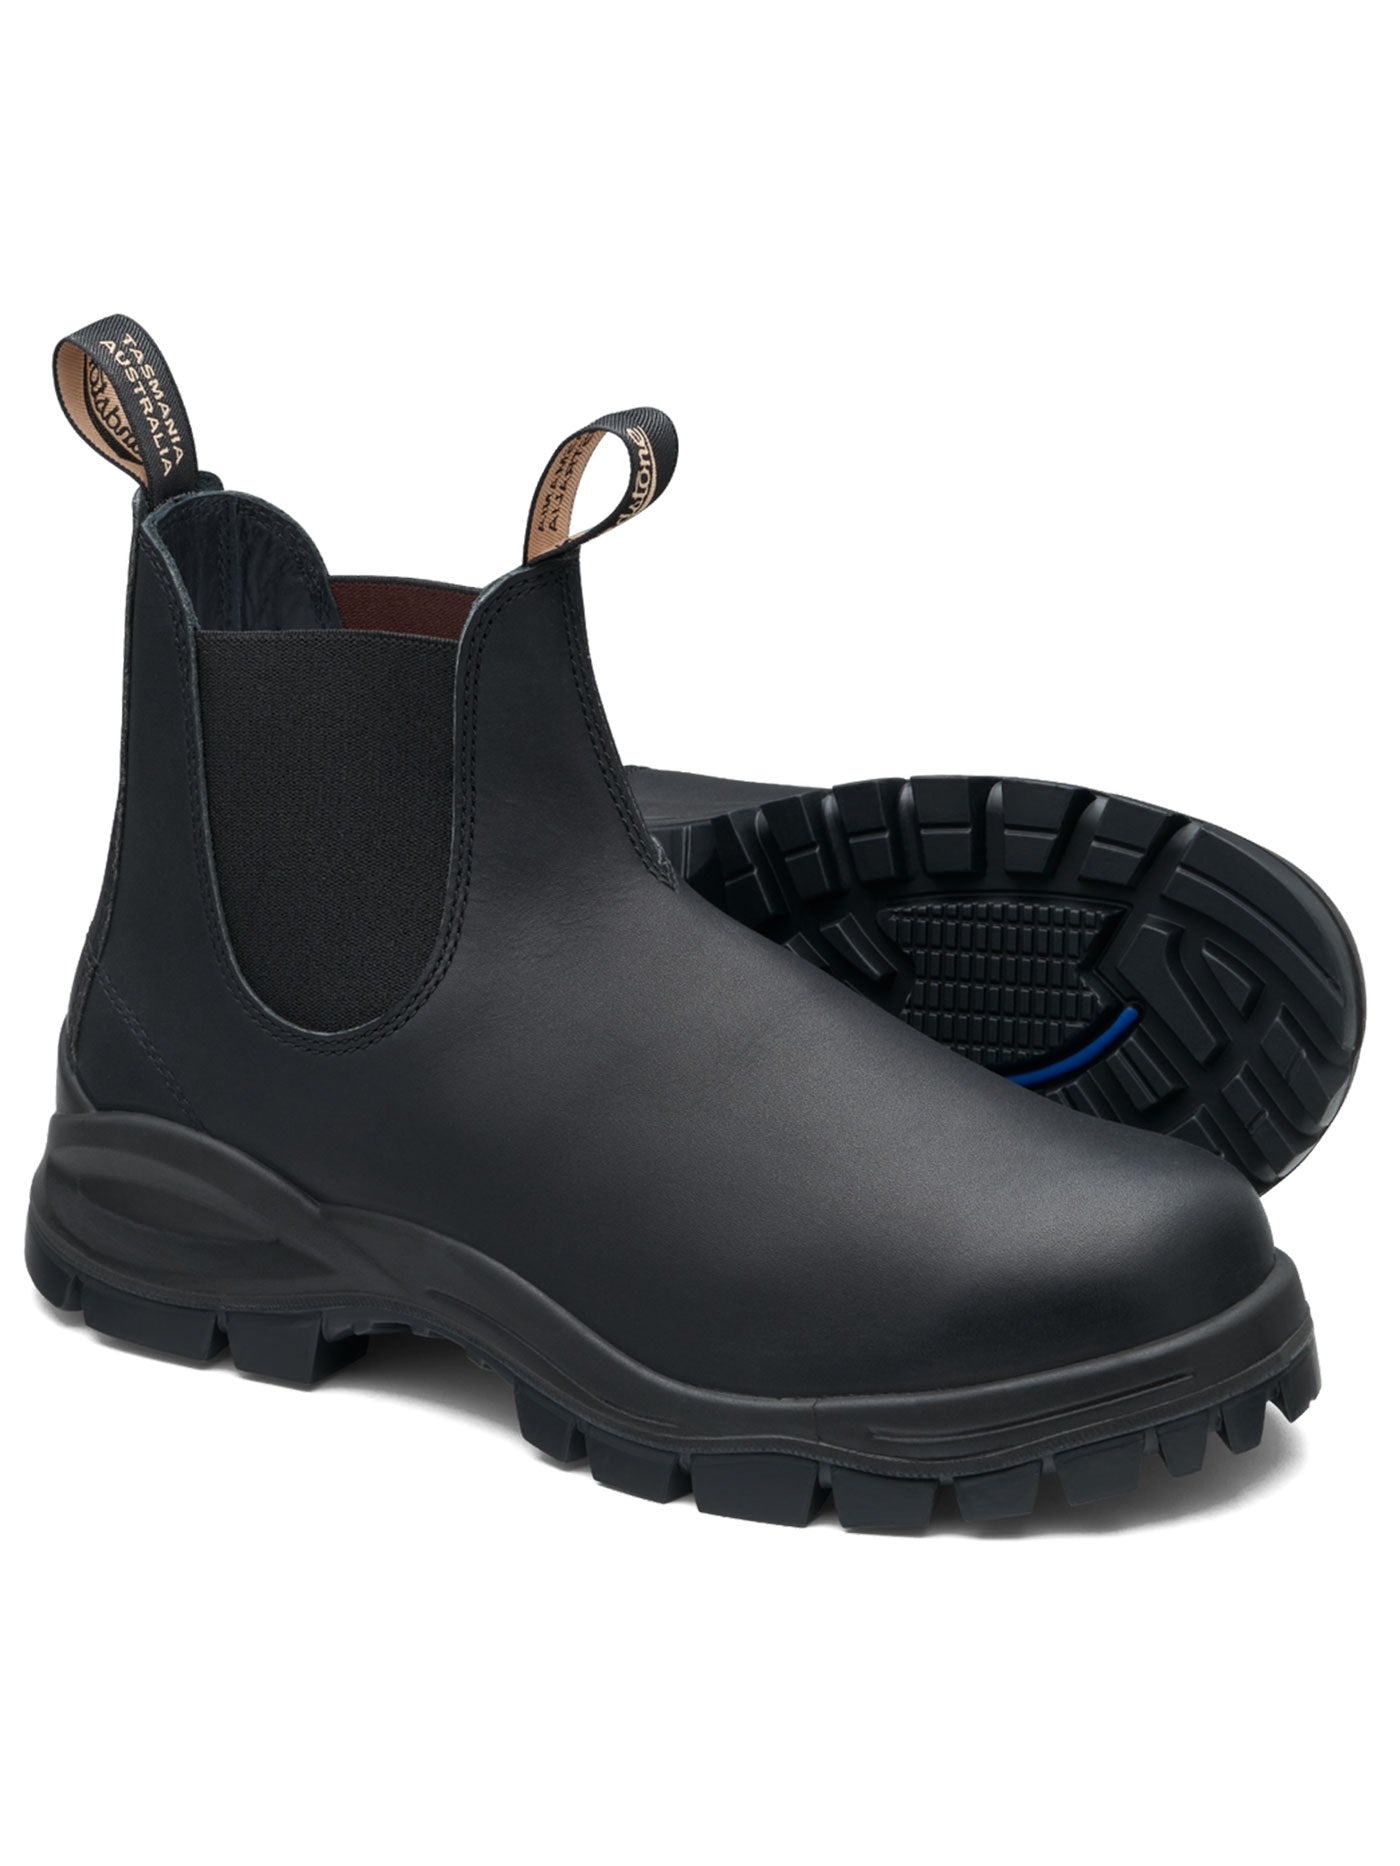 Blundstone 2240 Lug Sole Black Boots